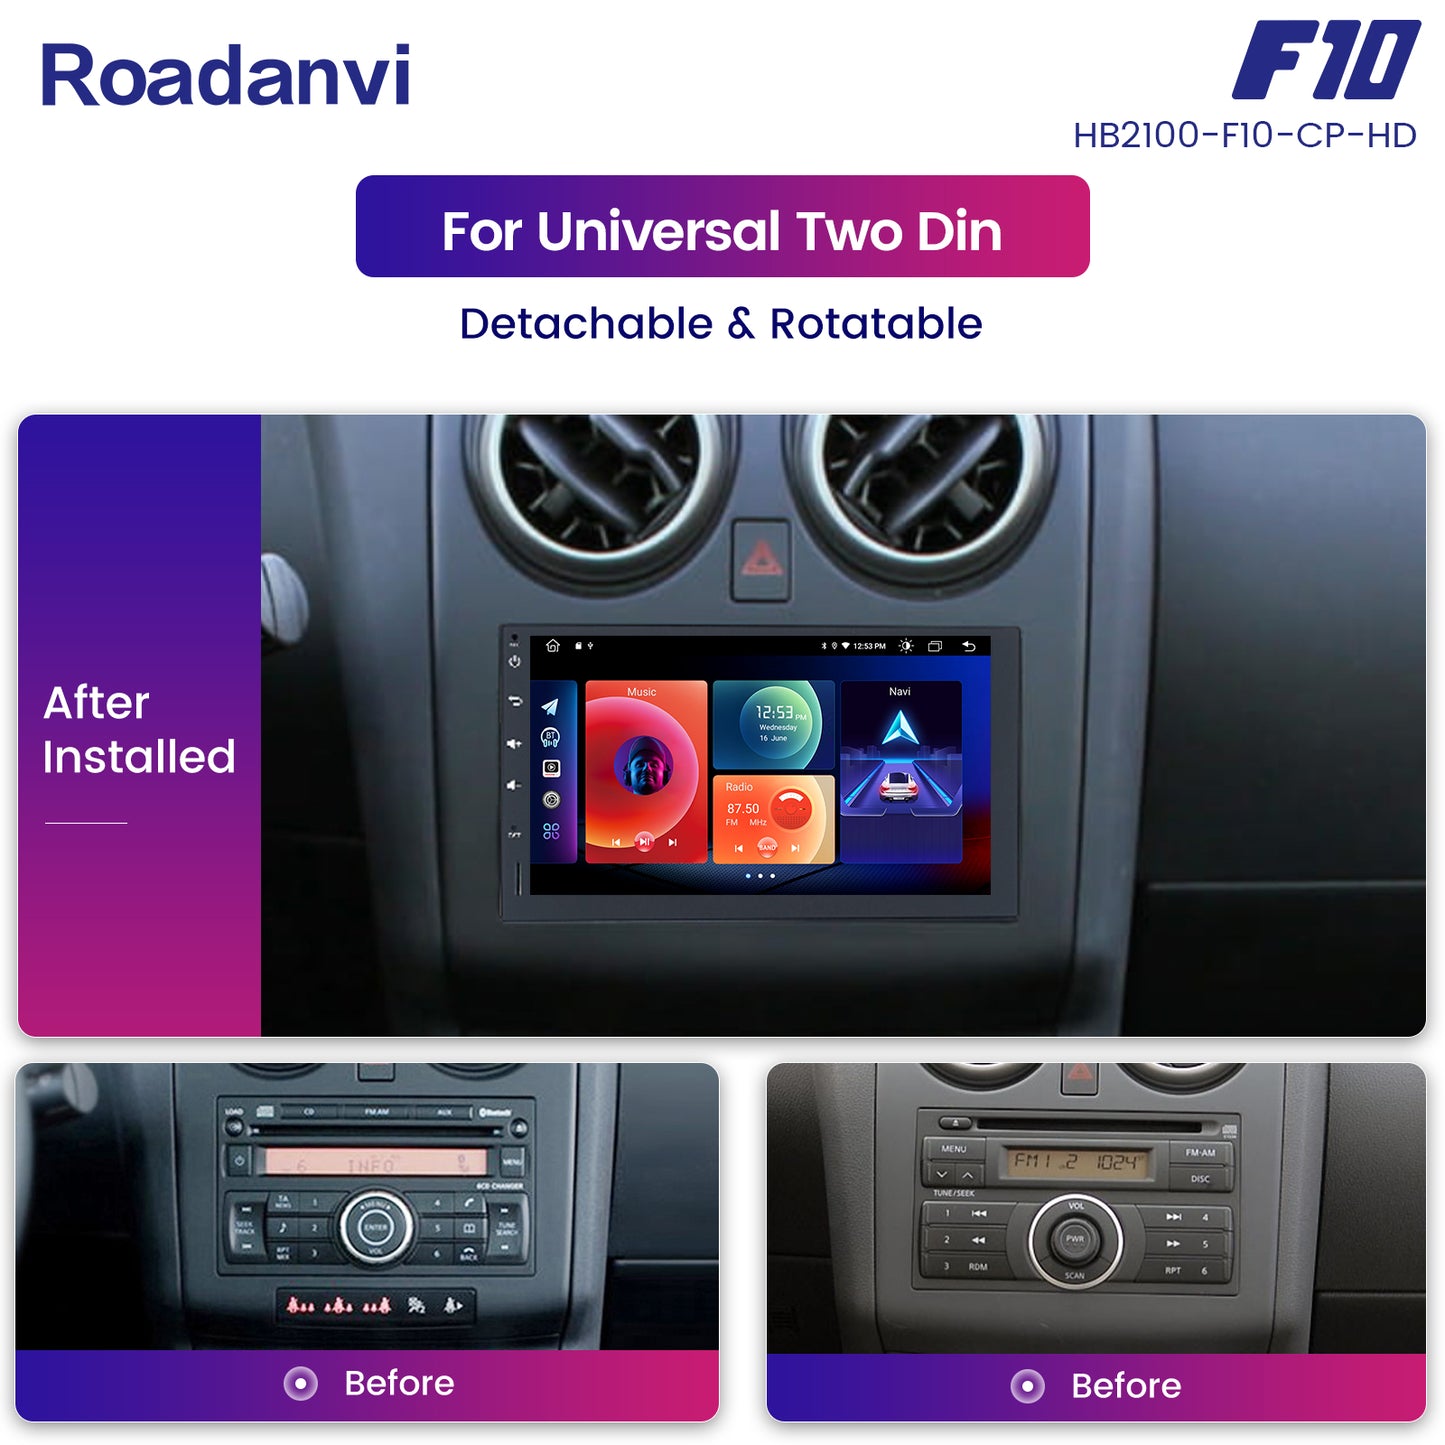 Roadanvi F10 For Single Din Universal Car Radio Android 7 inch Touch s